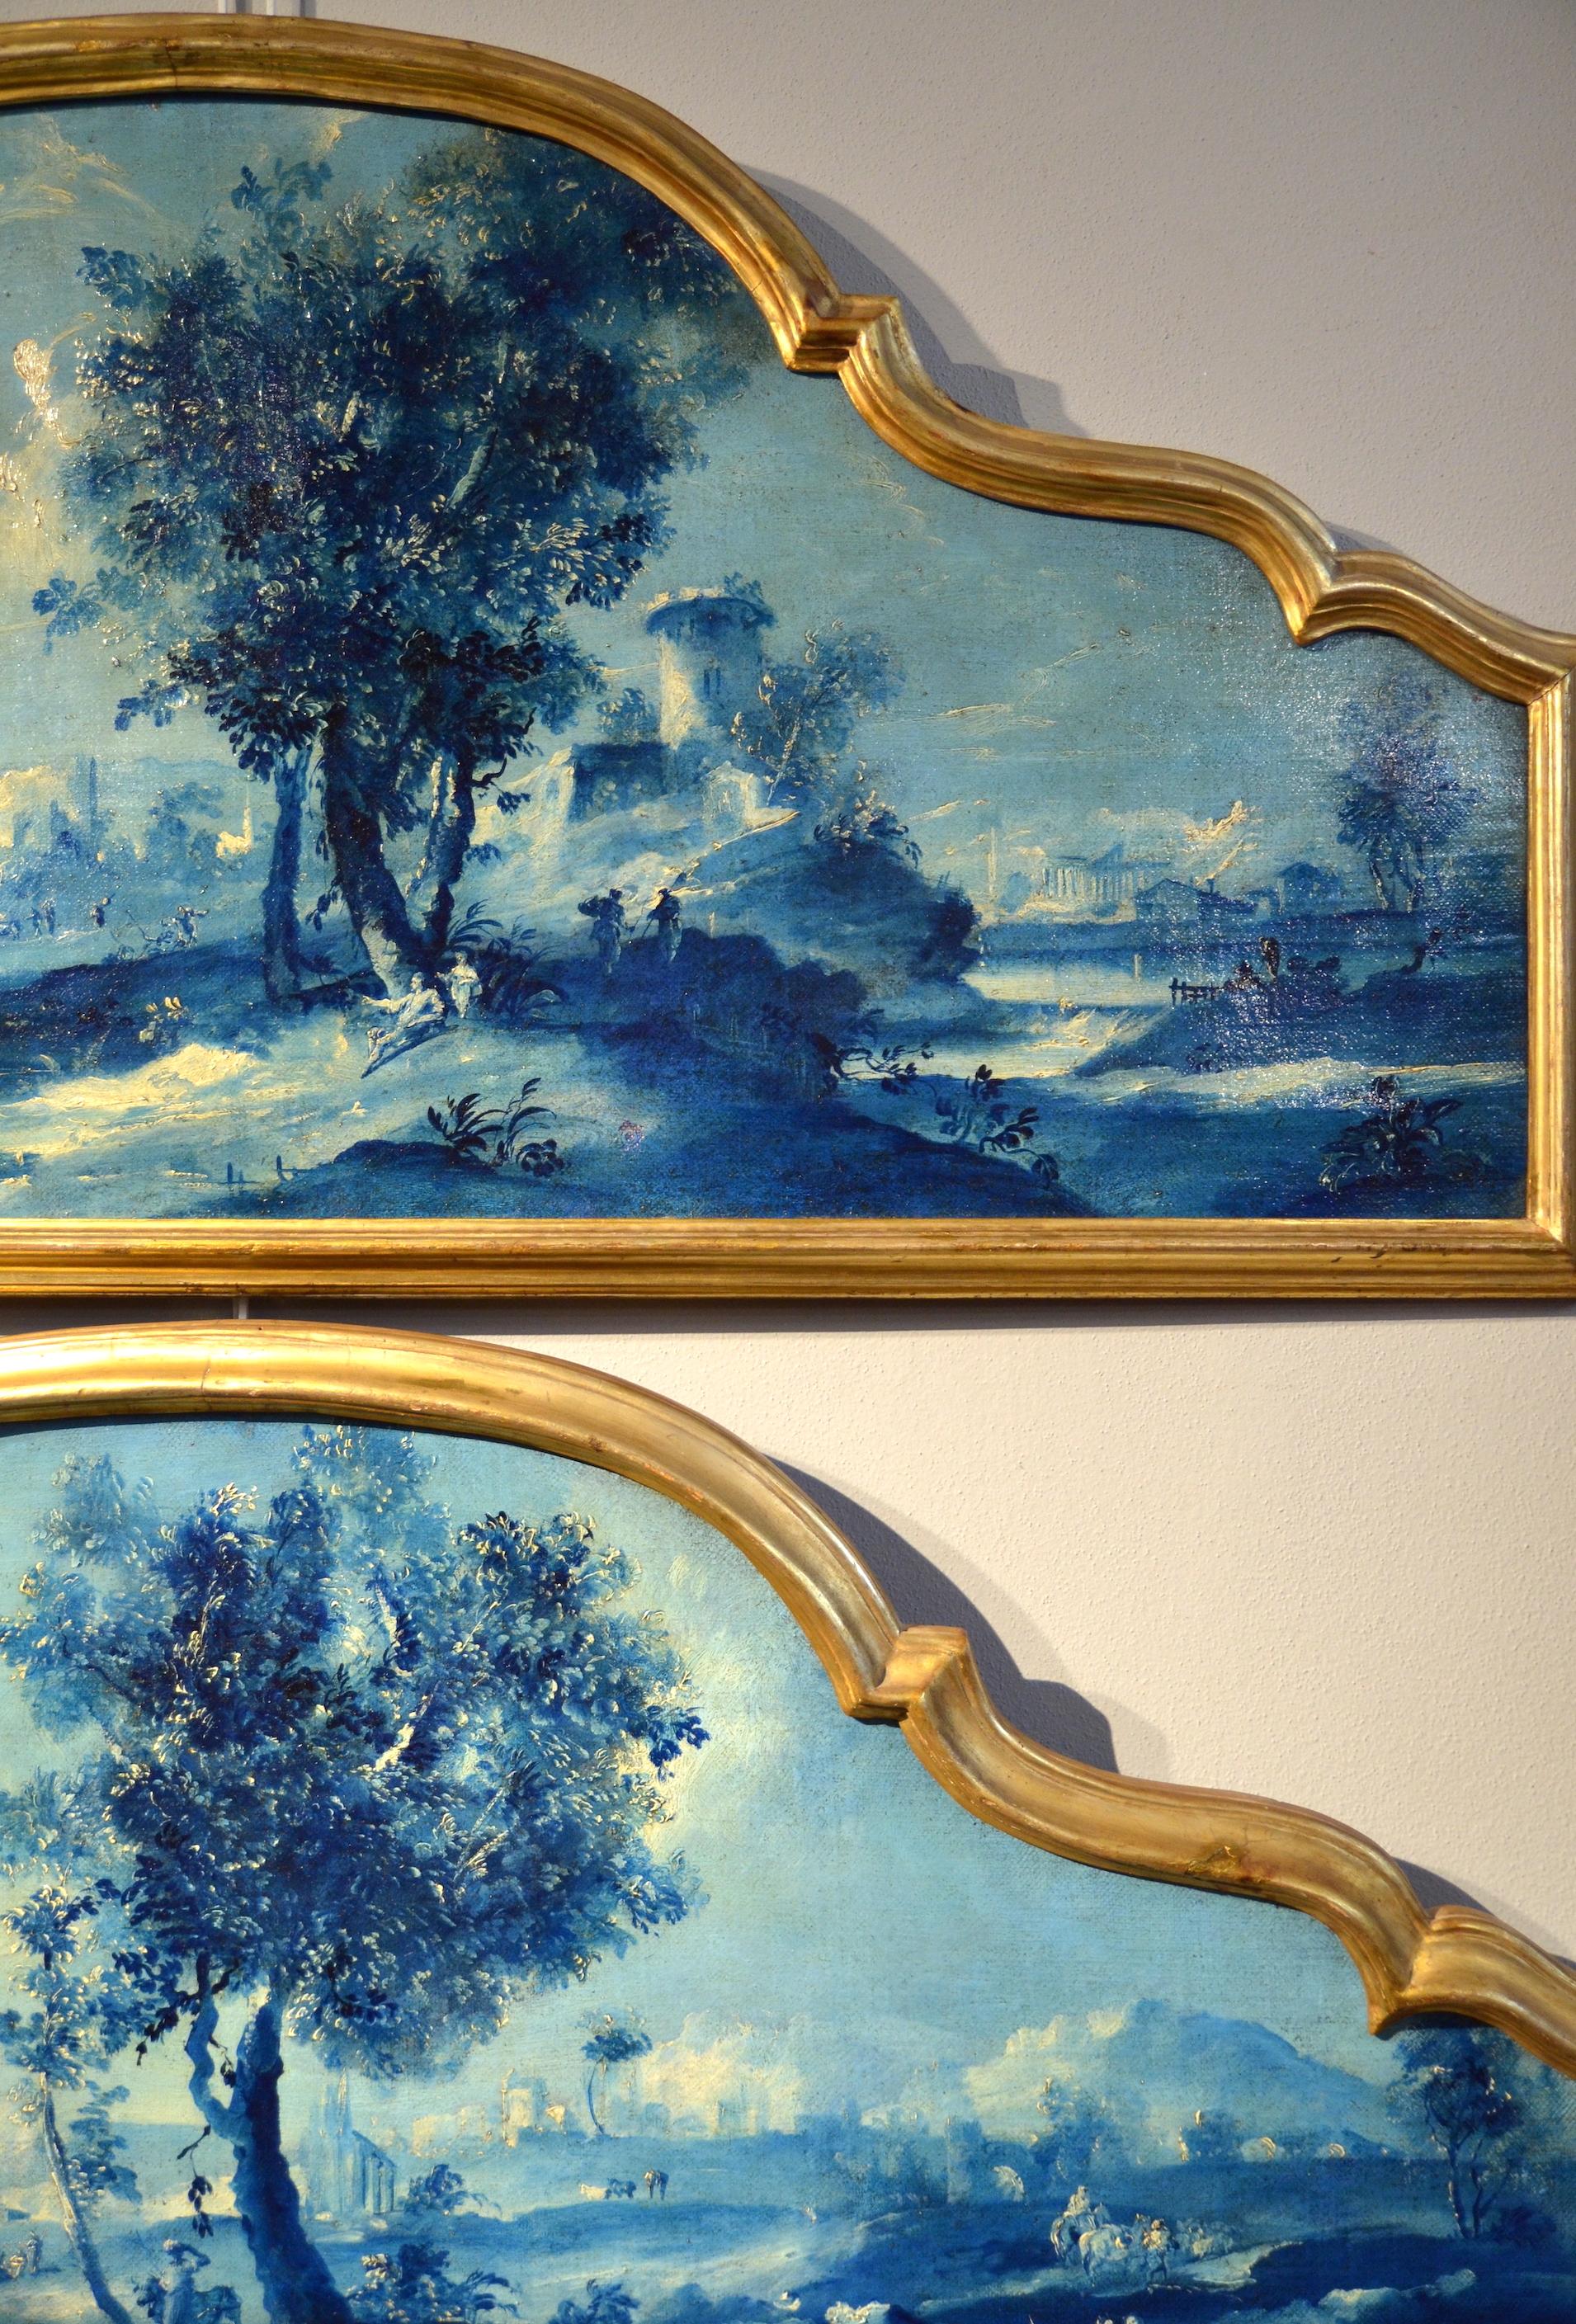 Paint Oil on canvas Pair Landscape Wood See Lake Venezia Italy Baroque Ricci Art 5